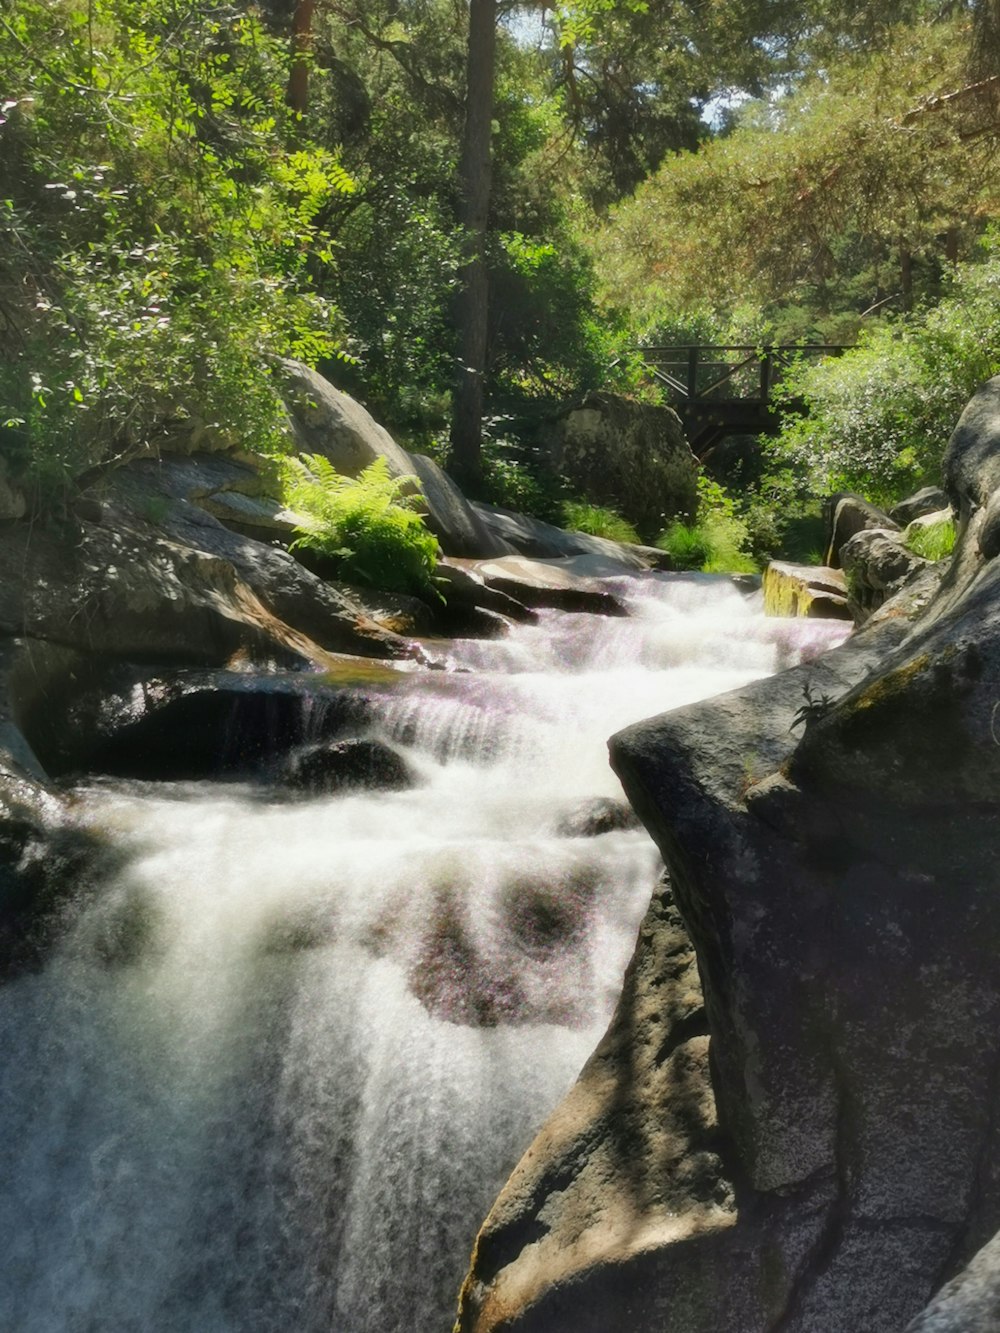 waterfalls between green trees during daytime